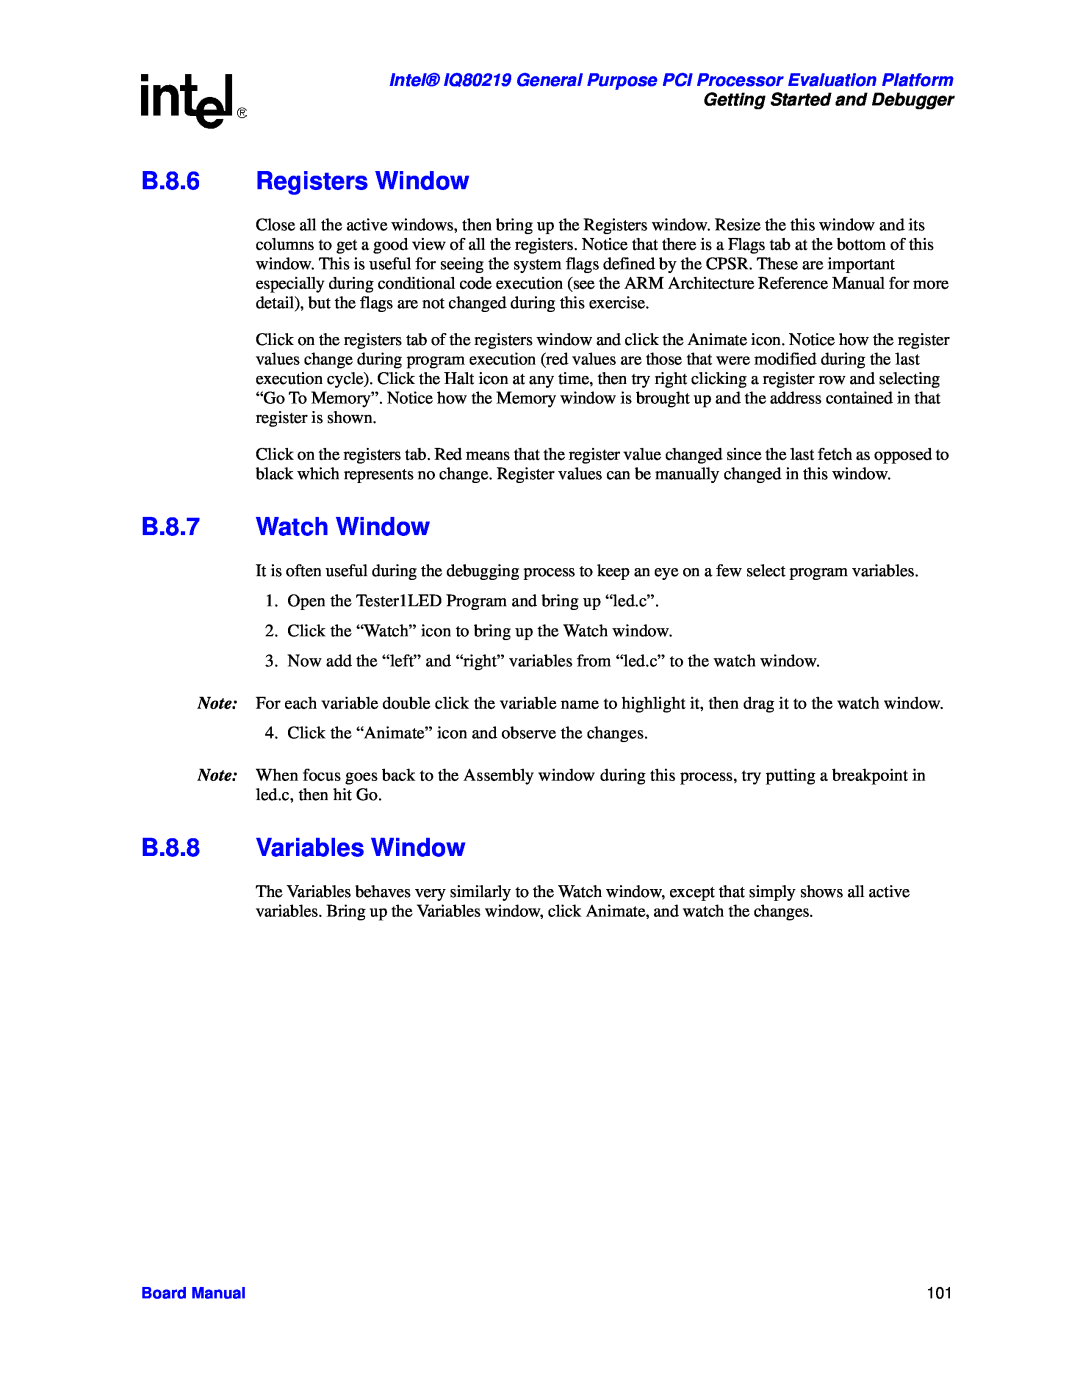 Intel IQ80219 manual B.8.6 Registers Window, B.8.7 Watch Window, B.8.8 Variables Window, Getting Started and Debugger 